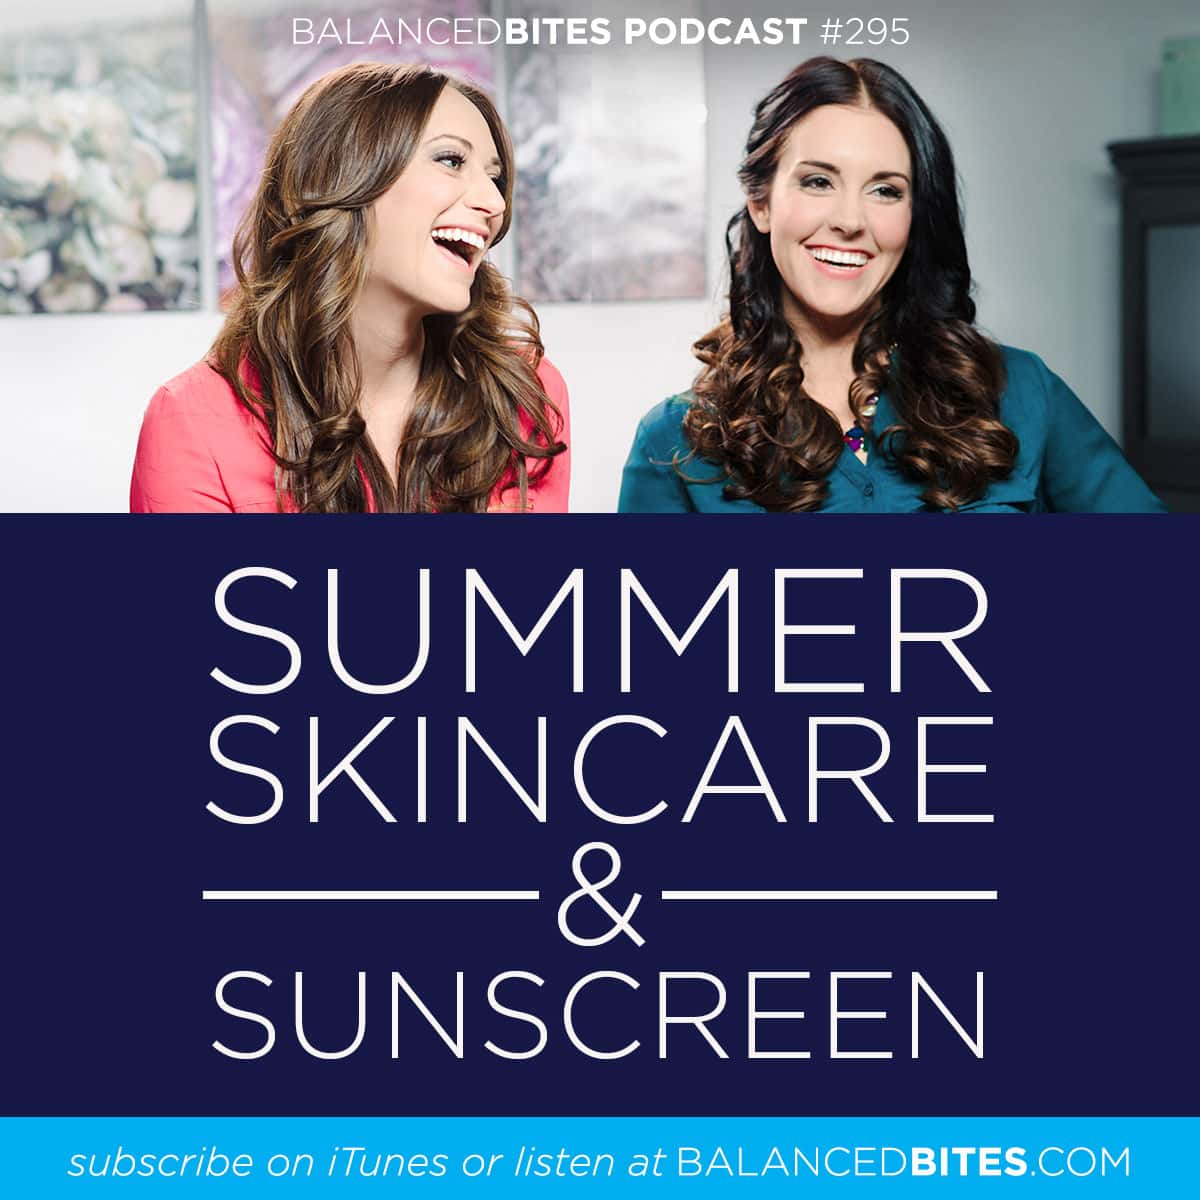 Diane Sanfilippo & Liz Wolfe | Balanced Bites Podcast | Summer Skincare & Sunscreen